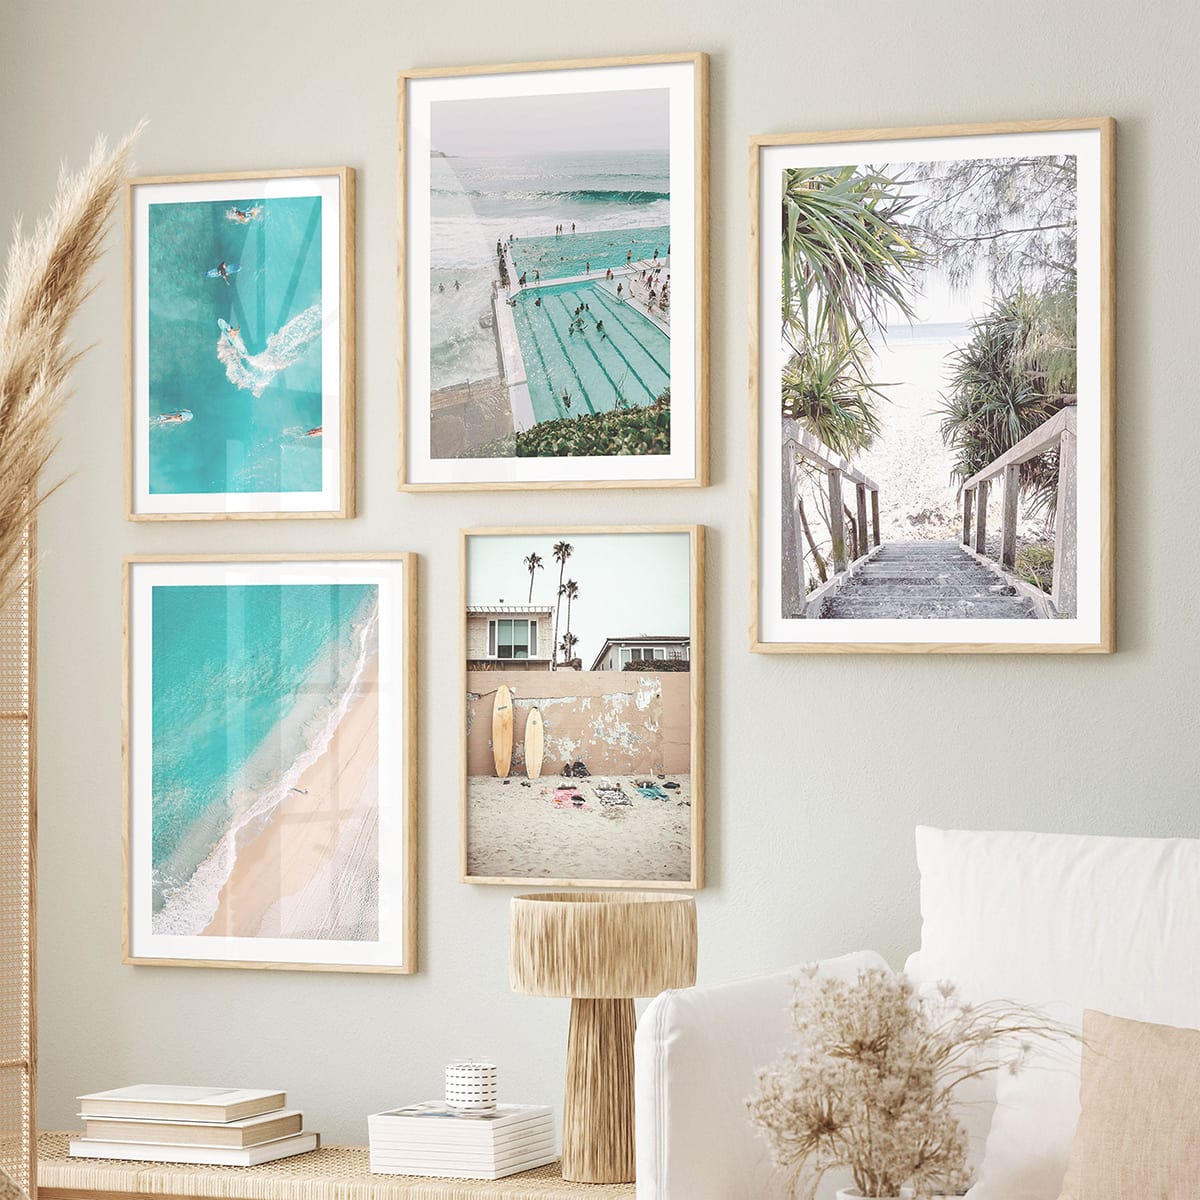 wall display of framed coastal and beach art prints